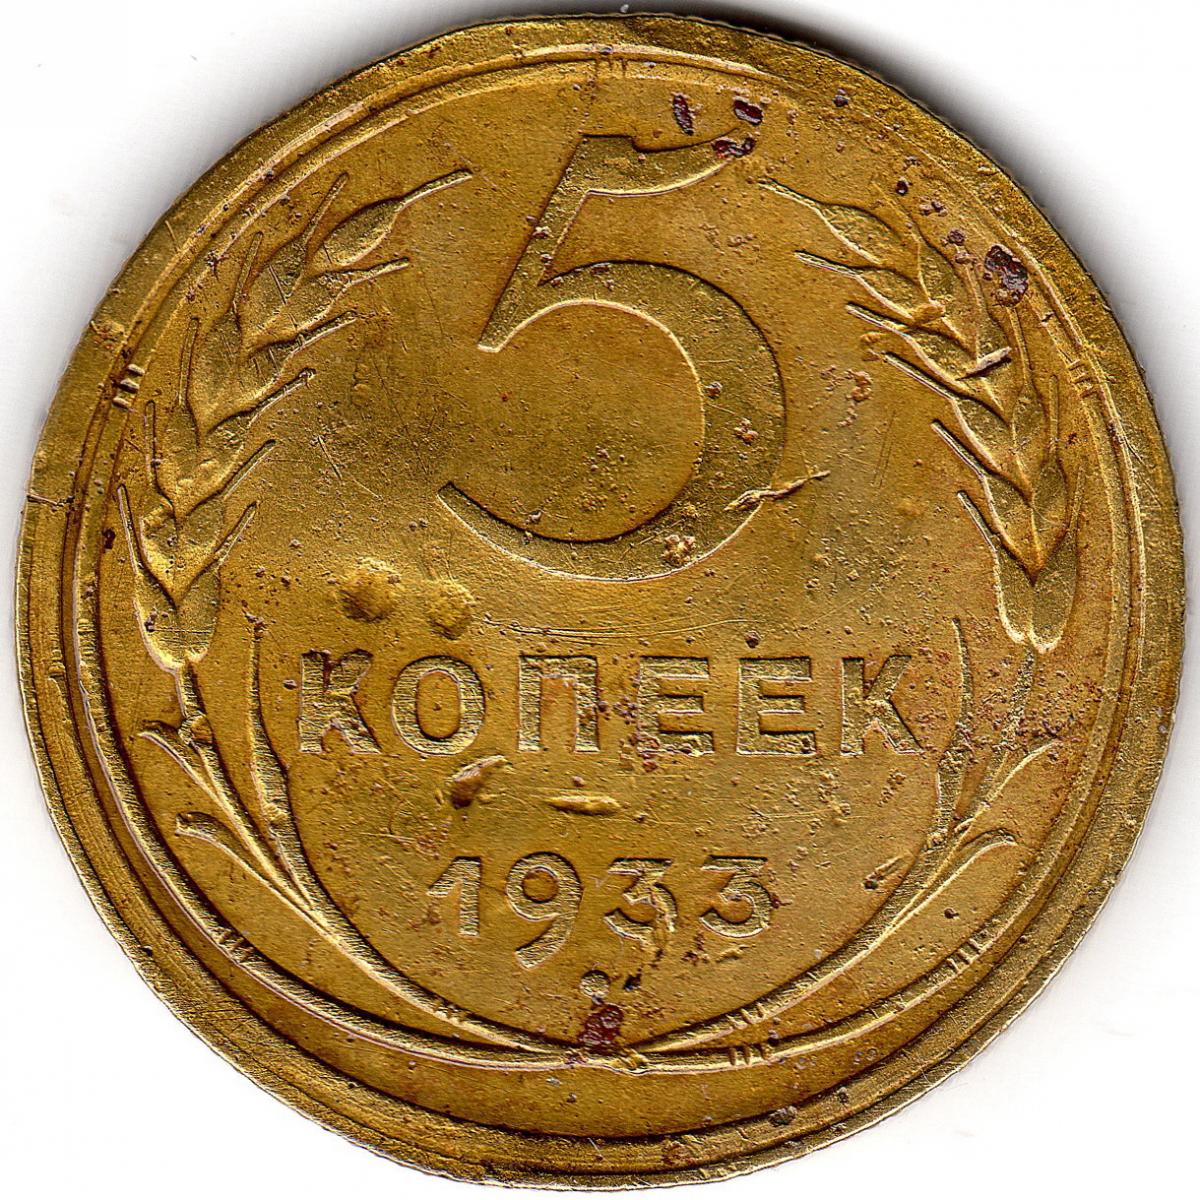 5 копеек 61. 5 Копеек 1933. Монета 2 копейки 1933 a081310. Старинная монета 5 копеек. Ржавая копейка монета.